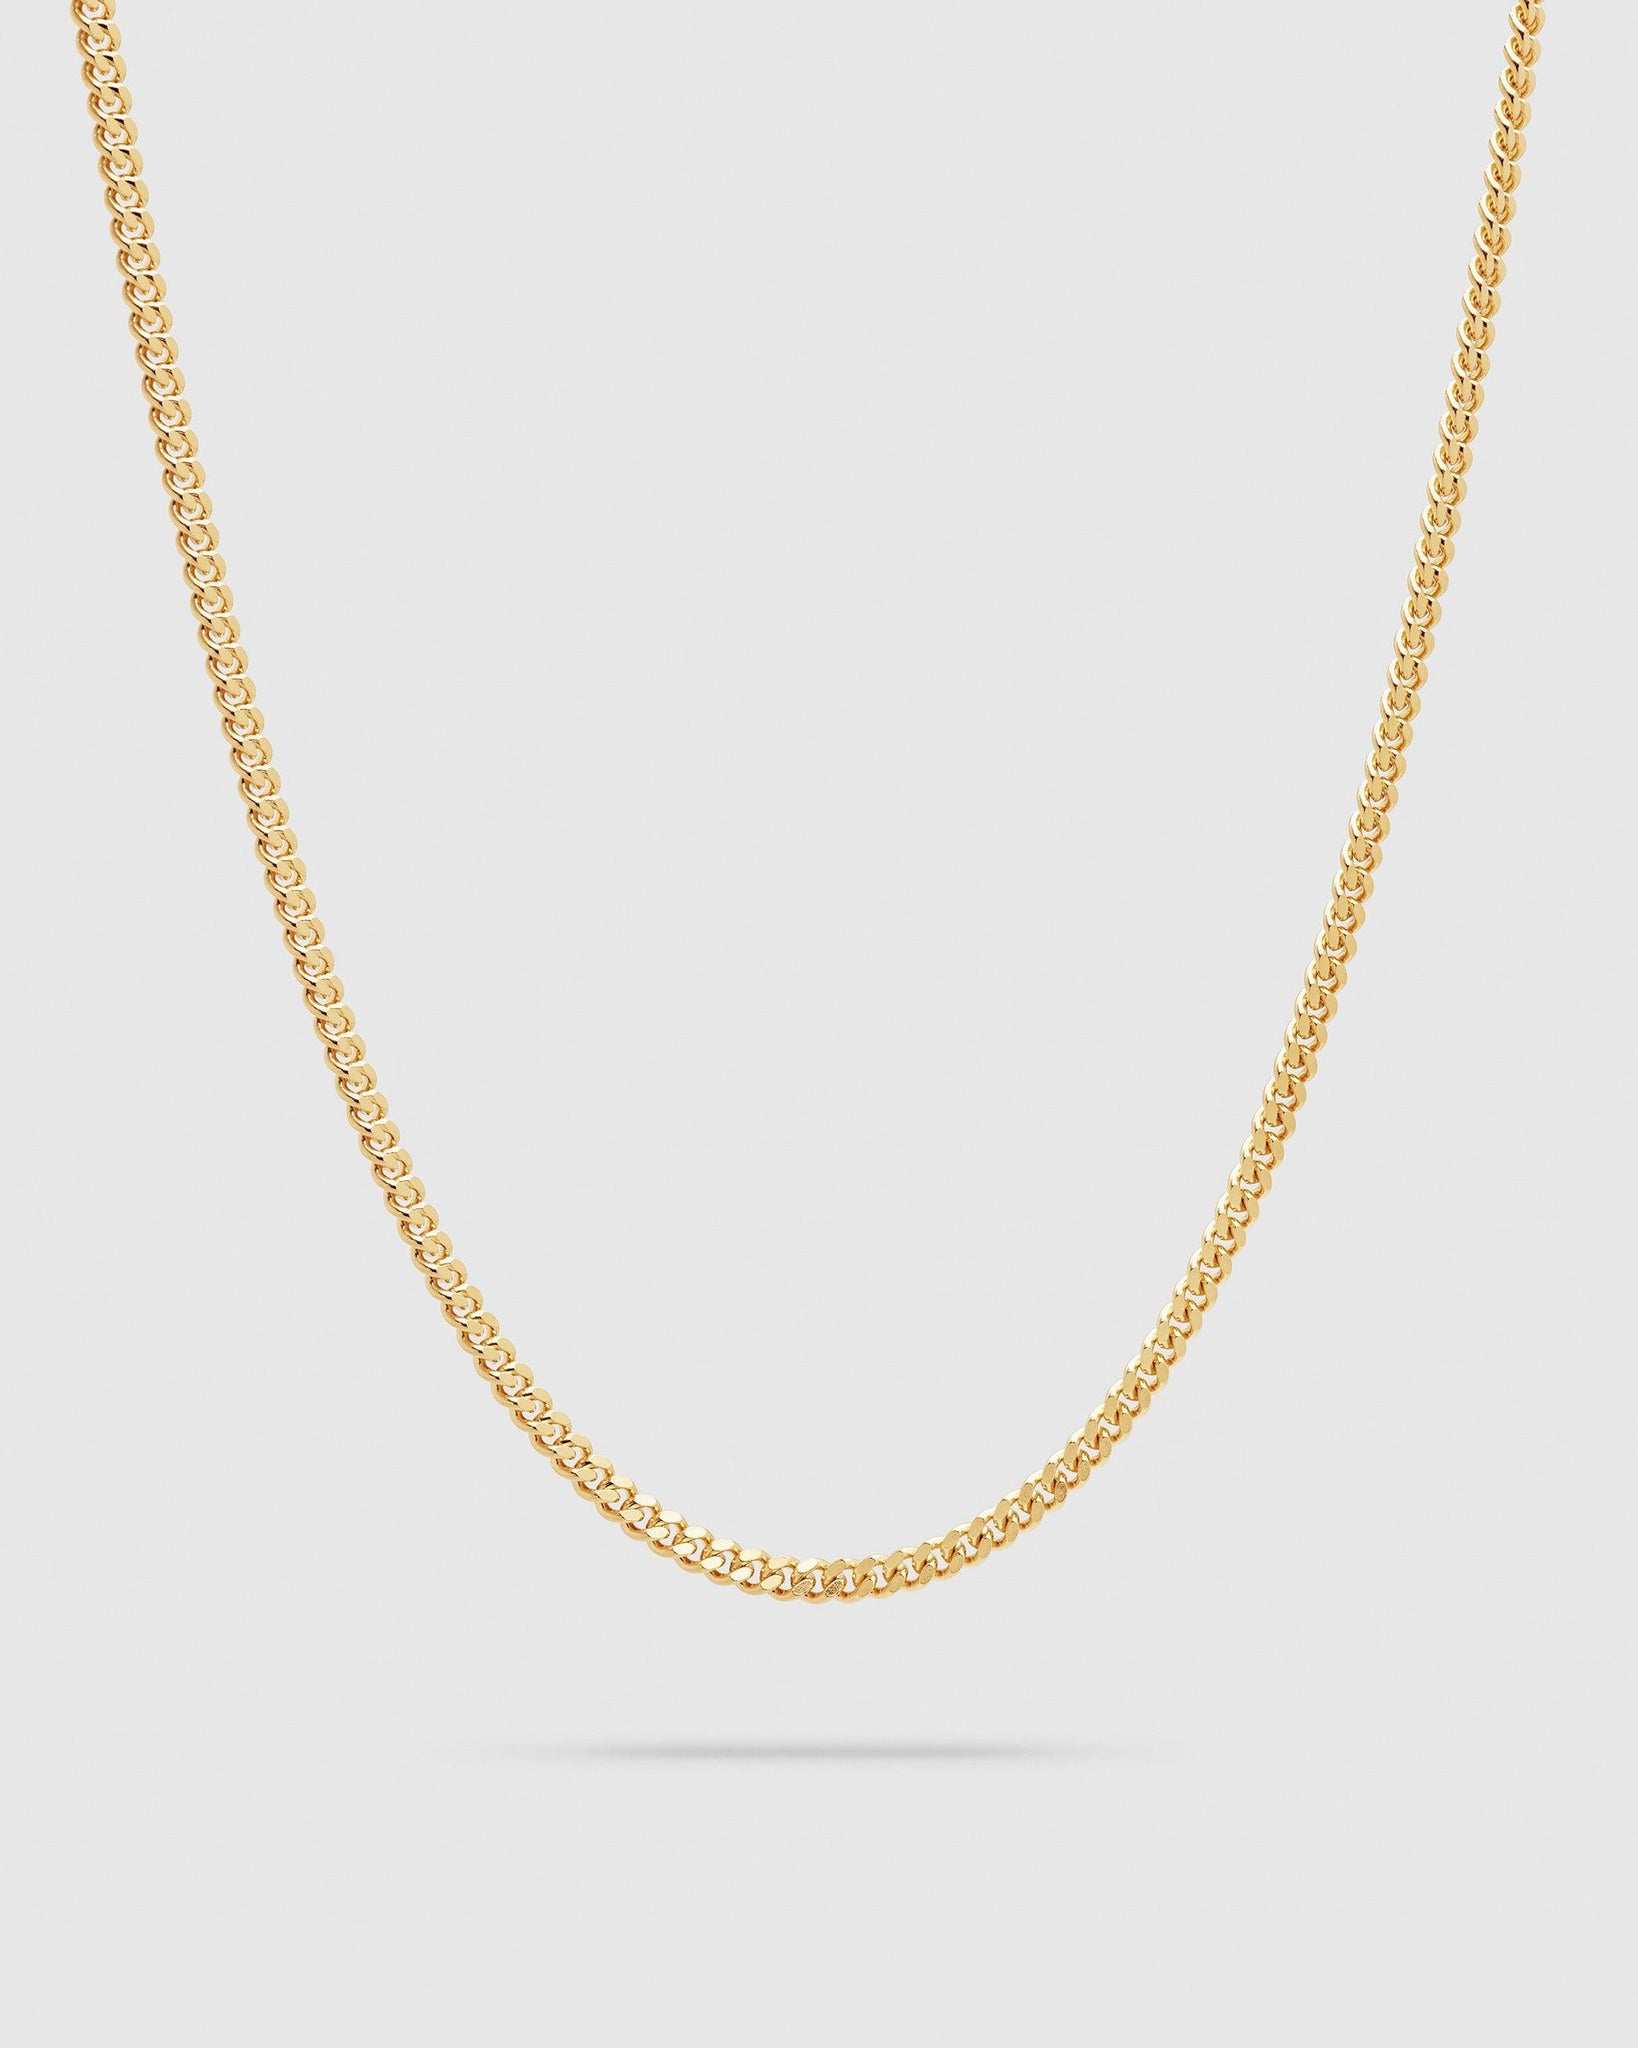 Curb Chain M Gold - Jewelry - Tom Wood - Elevastor